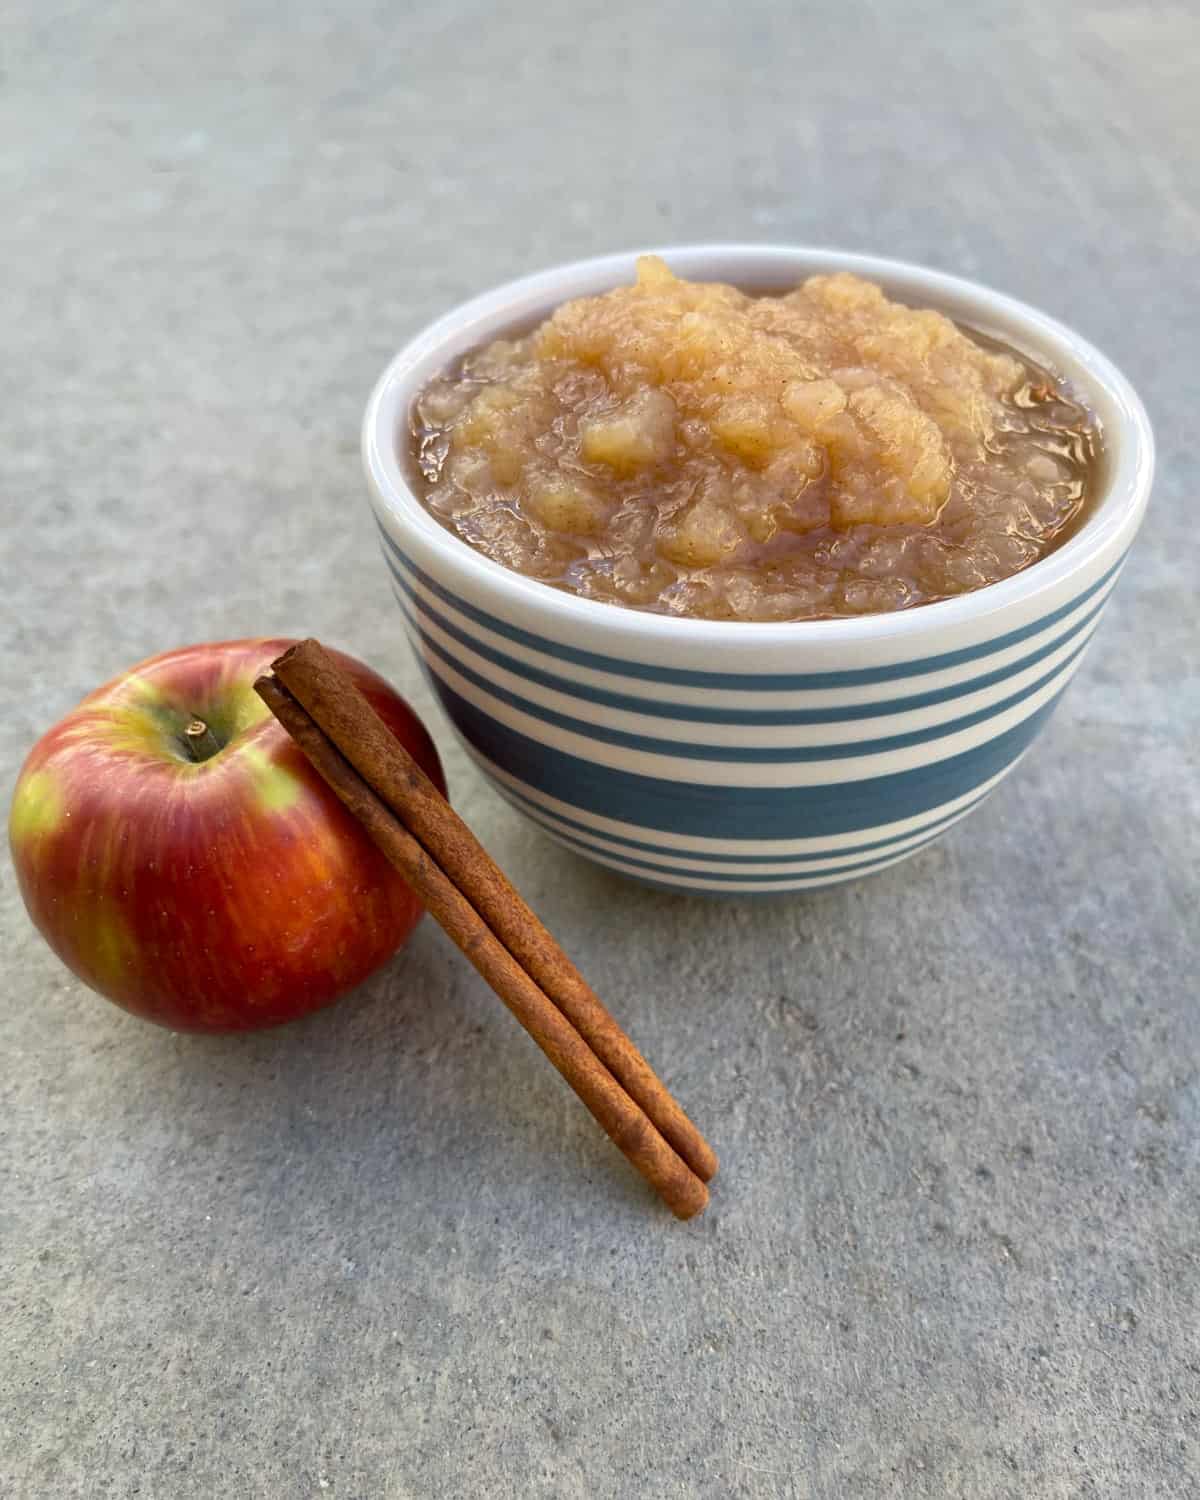 Instant Pot σάλτσα μήλου κανέλας σε μικρό μπολ κοντά σε φρέσκο ​​μήλο και ξυλάκι κανέλας.